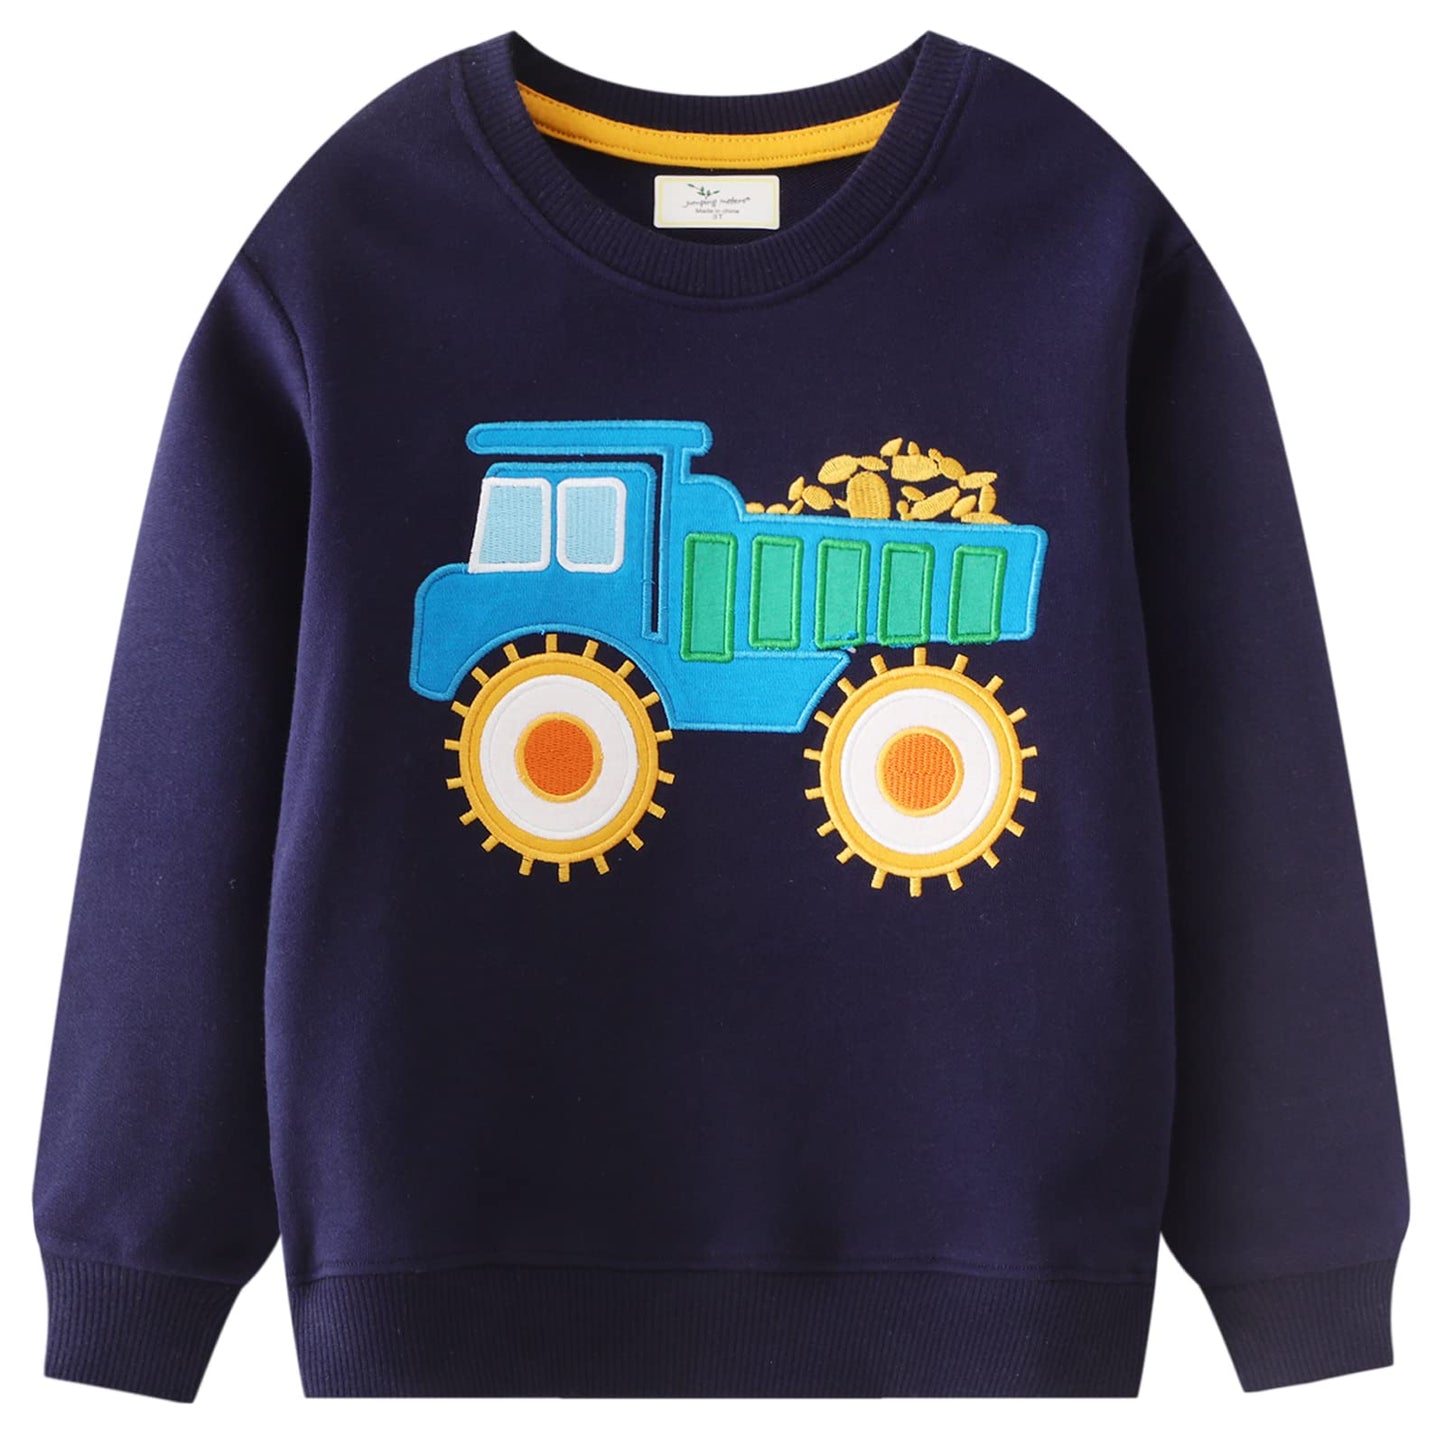 DHASIUE Kids Boys Dinosaur Sweatshirt Jumper T-Shirt Cute Long Sleeve Tops Casual Cotton Tee Shirts Toddler Clothes Age 1-7 Years